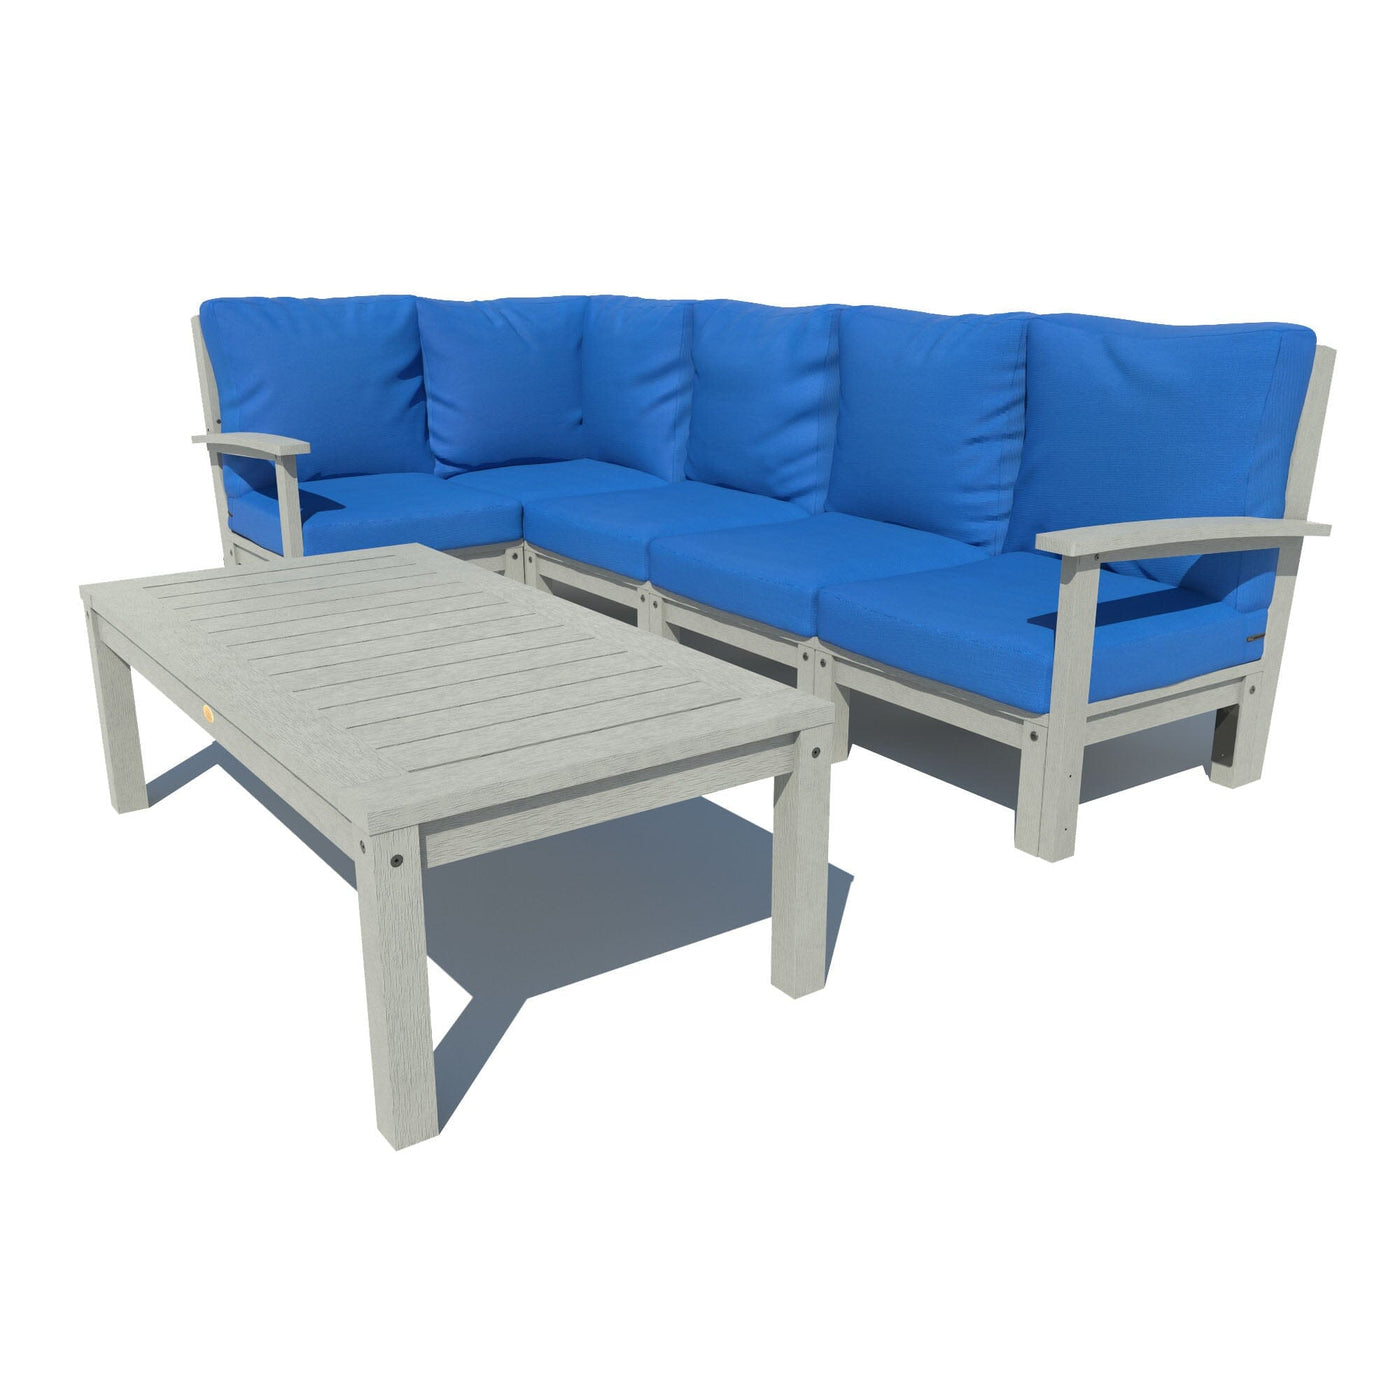 Bespoke Deep Seating: 6 Piece Sectional Set with Conversation Table Deep Seating Highwood USA Cobalt Blue Coastal Teak 